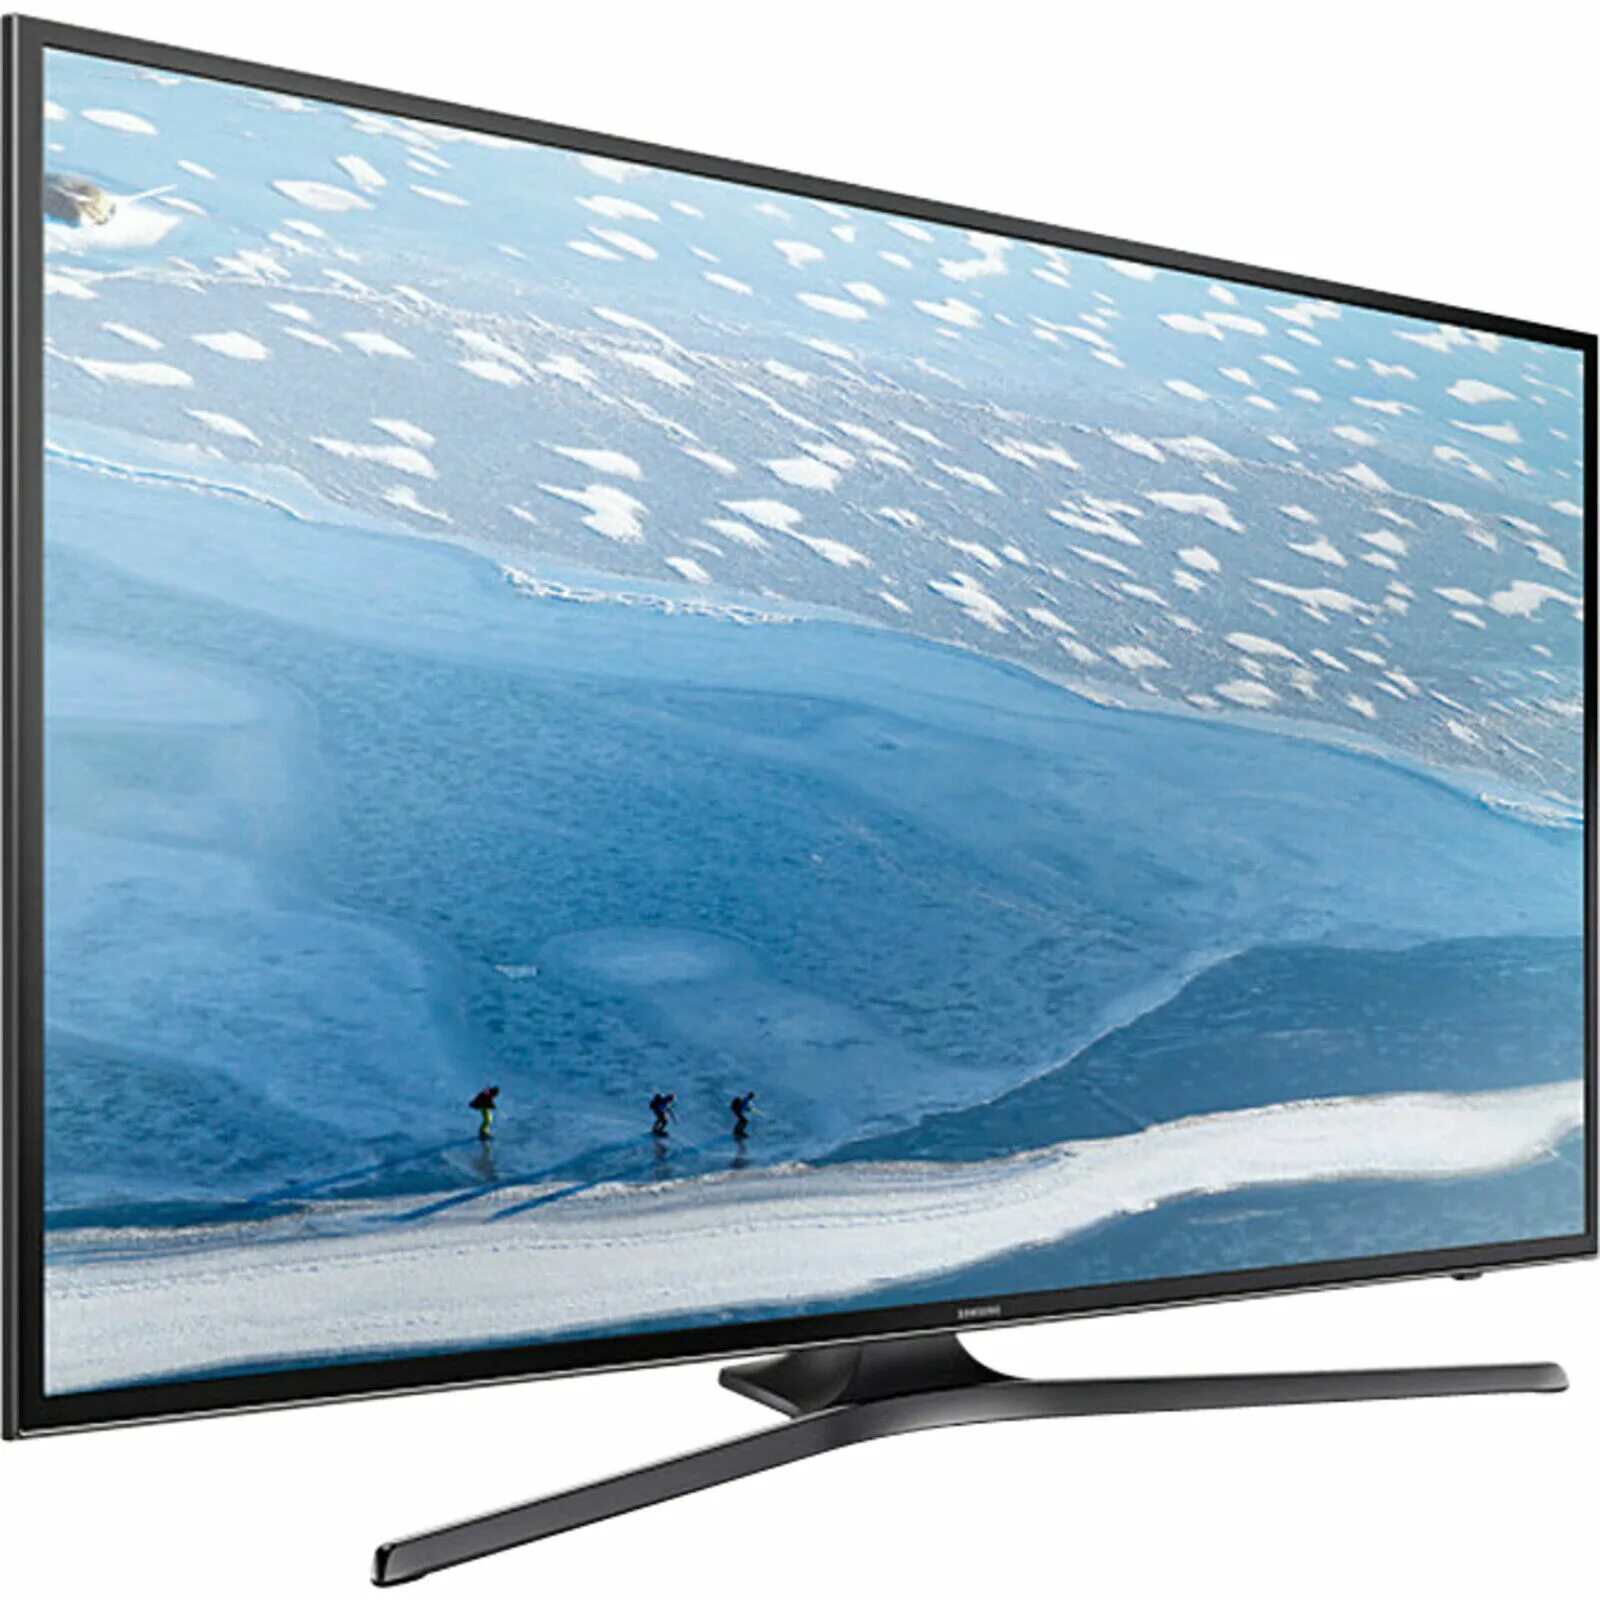 Купить телевизор в астрахани. Samsung ue50ku6000u. Samsung ue55ku6400u. Телевизор Samsung ue55ku6000. Телевизор Samsung ue49ku6400u 49" (2016).